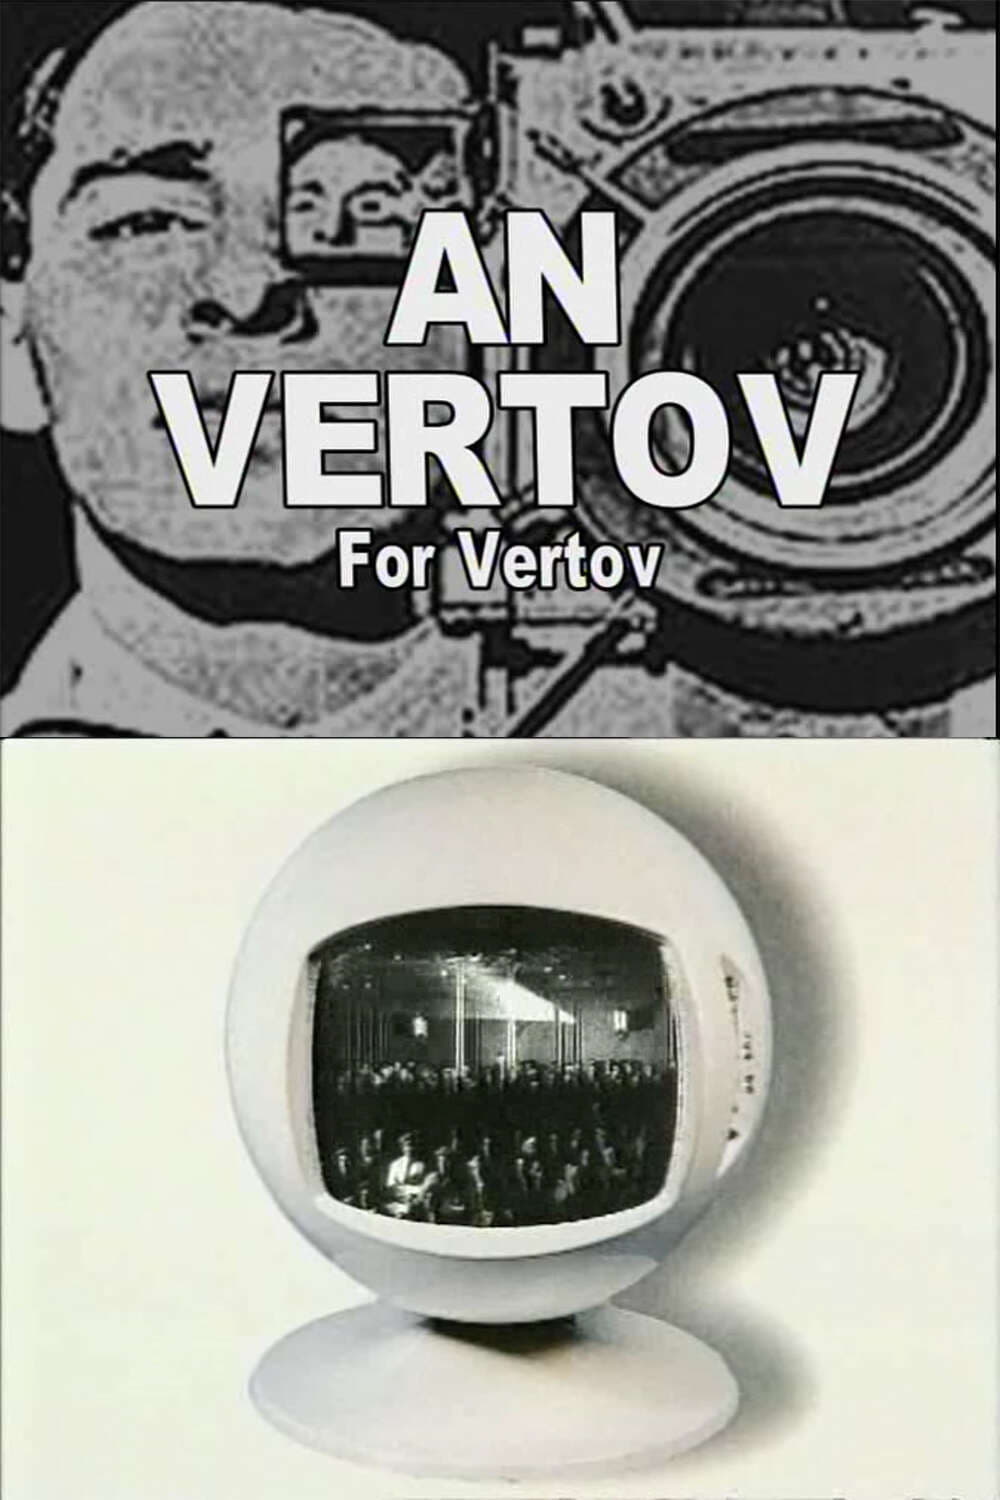 For Vertov